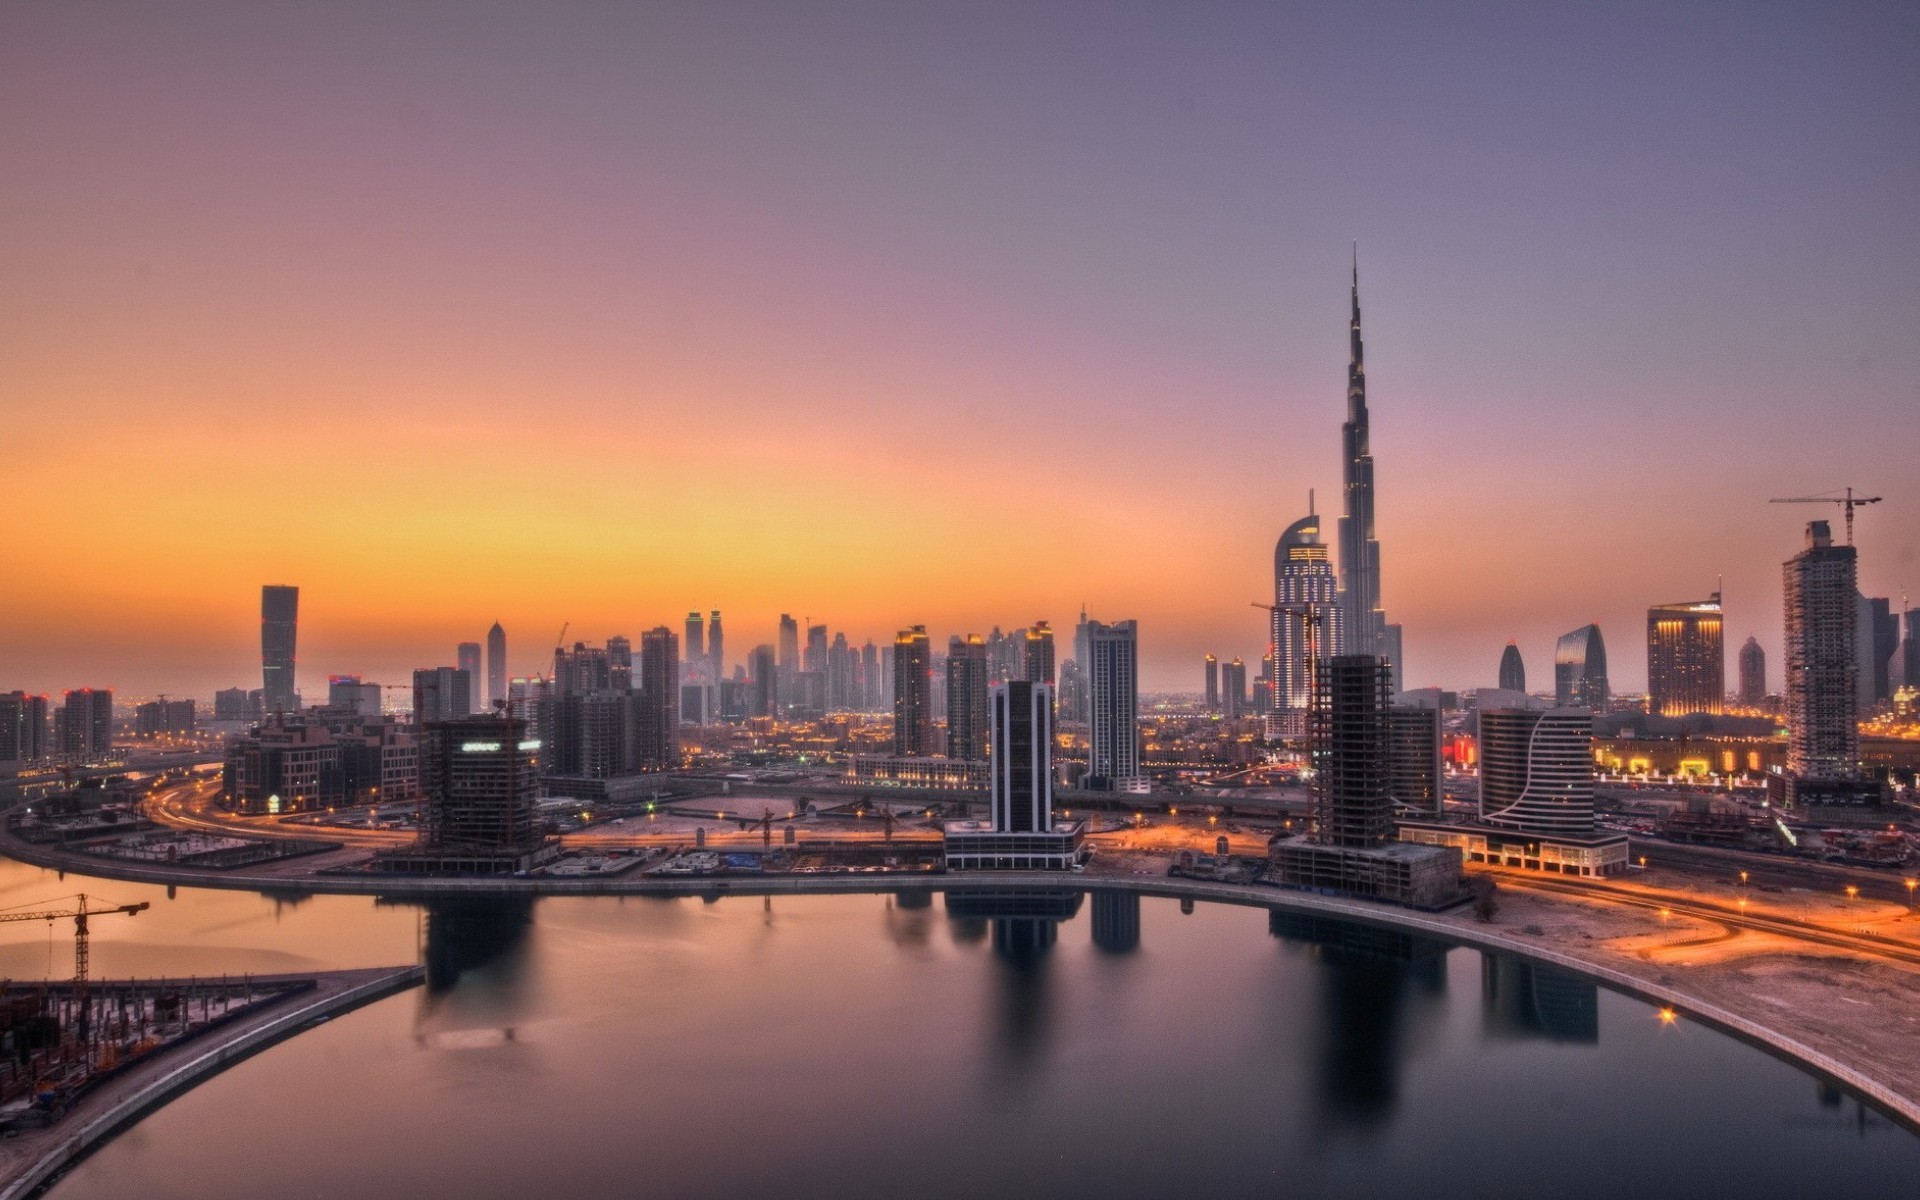 HD desktop wallpaper: Cities, Sunset, City, Skyscraper, Dubai, Cityscape,  River, United Arab Emirates, Emirates, Burj Khalifa, Man Made download free  picture #340151